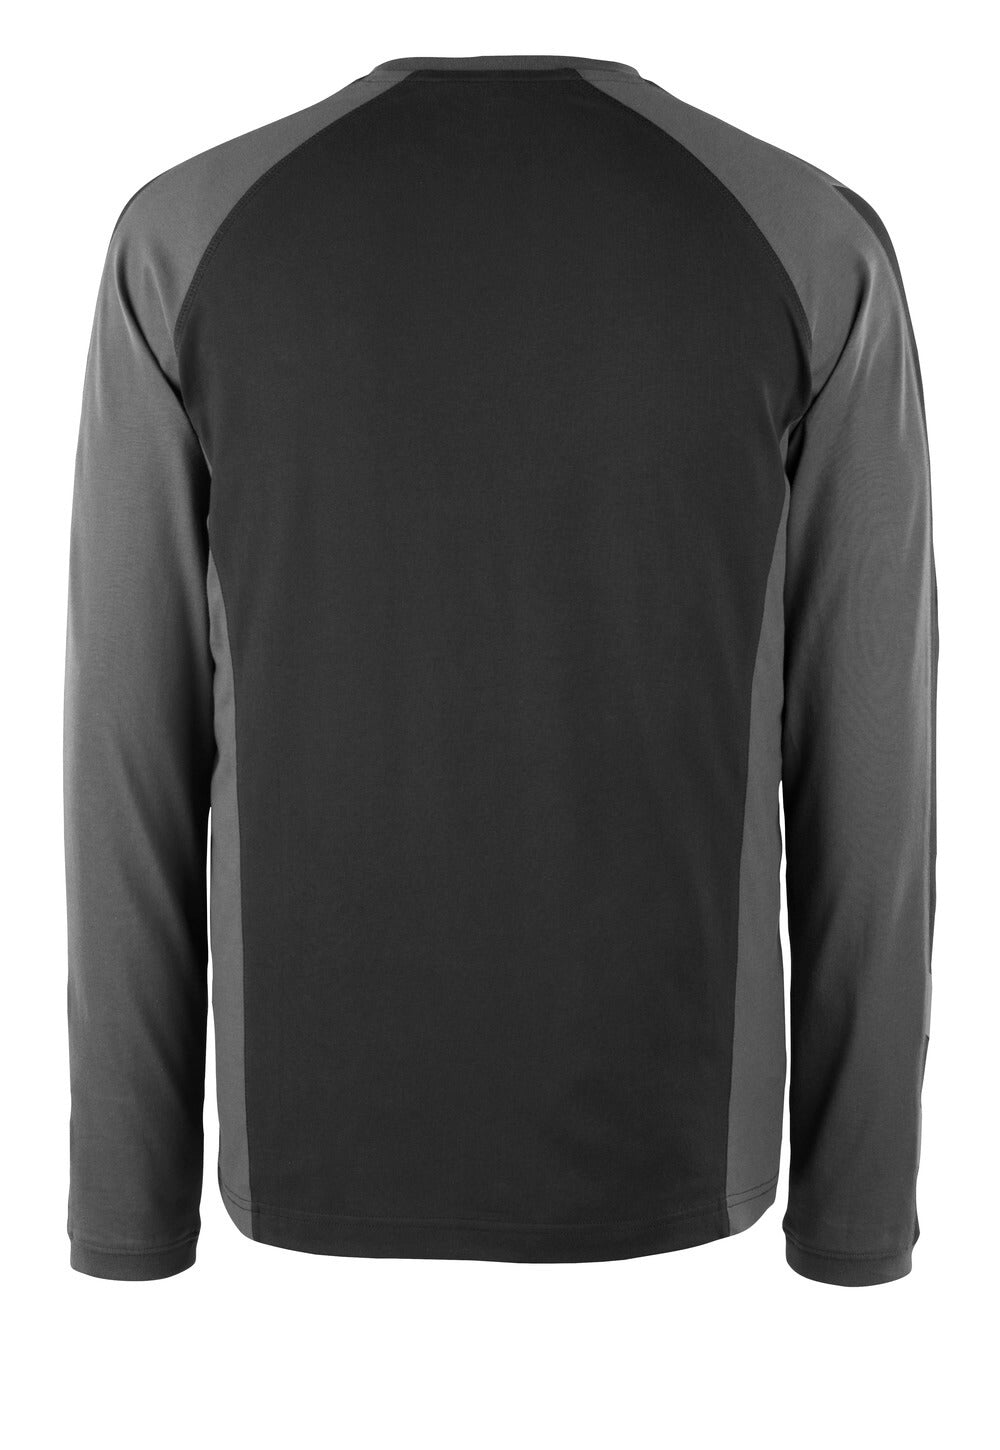 Mascot UNIQUE  Bielefeld T-shirt, long-sleeved 50568 black/dark anthracite